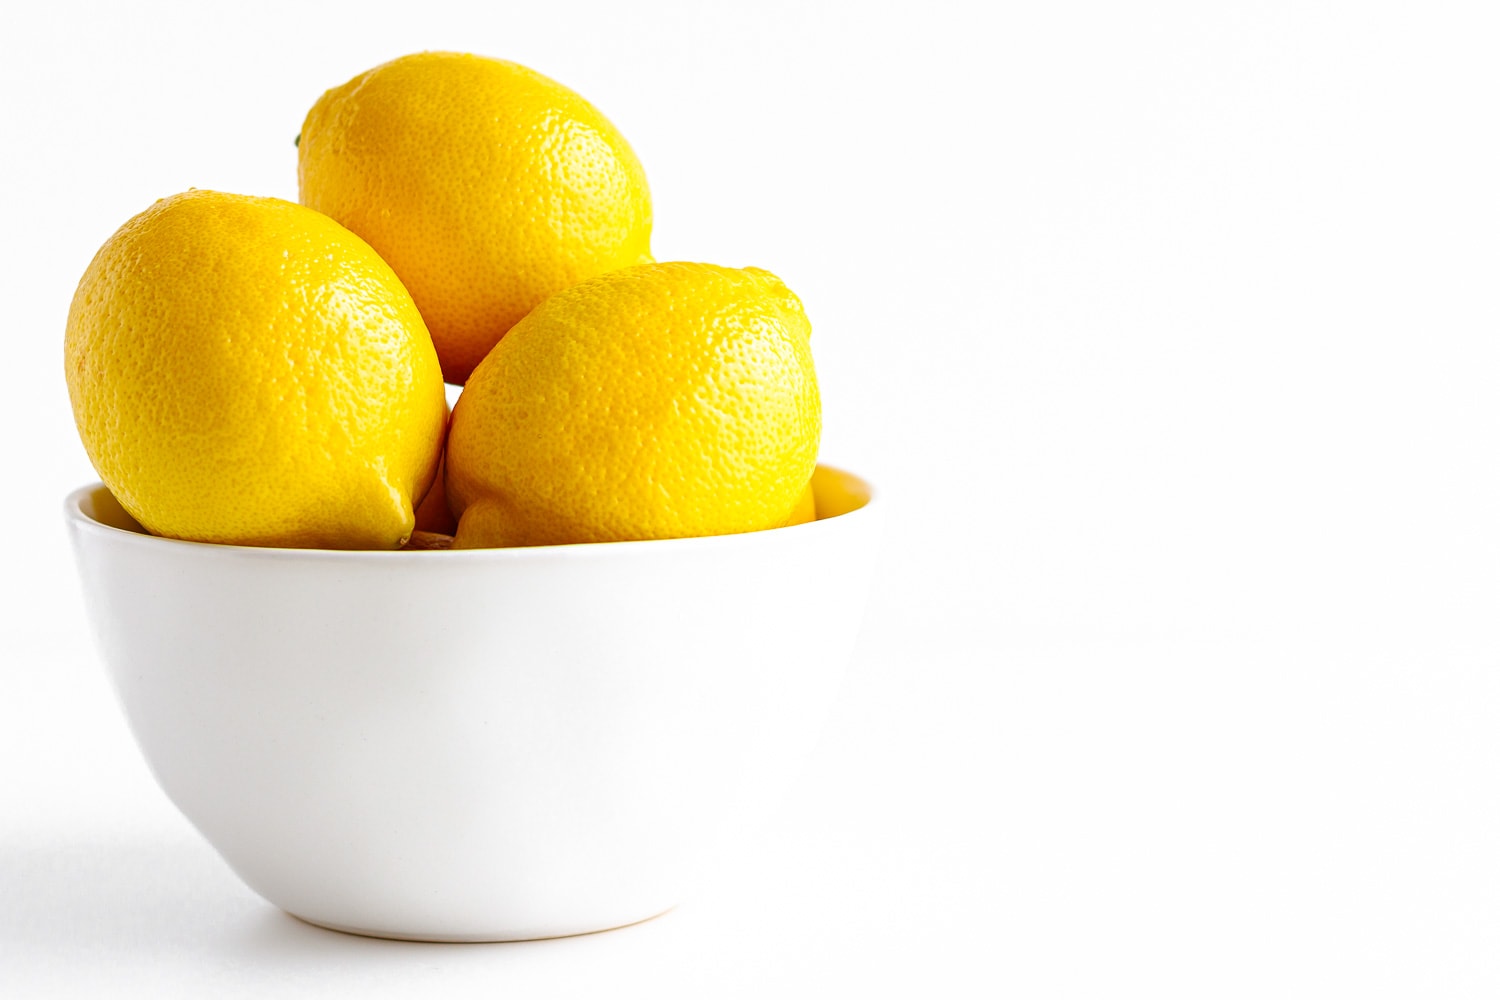 Lemons in a white bowl against a white backdrop.